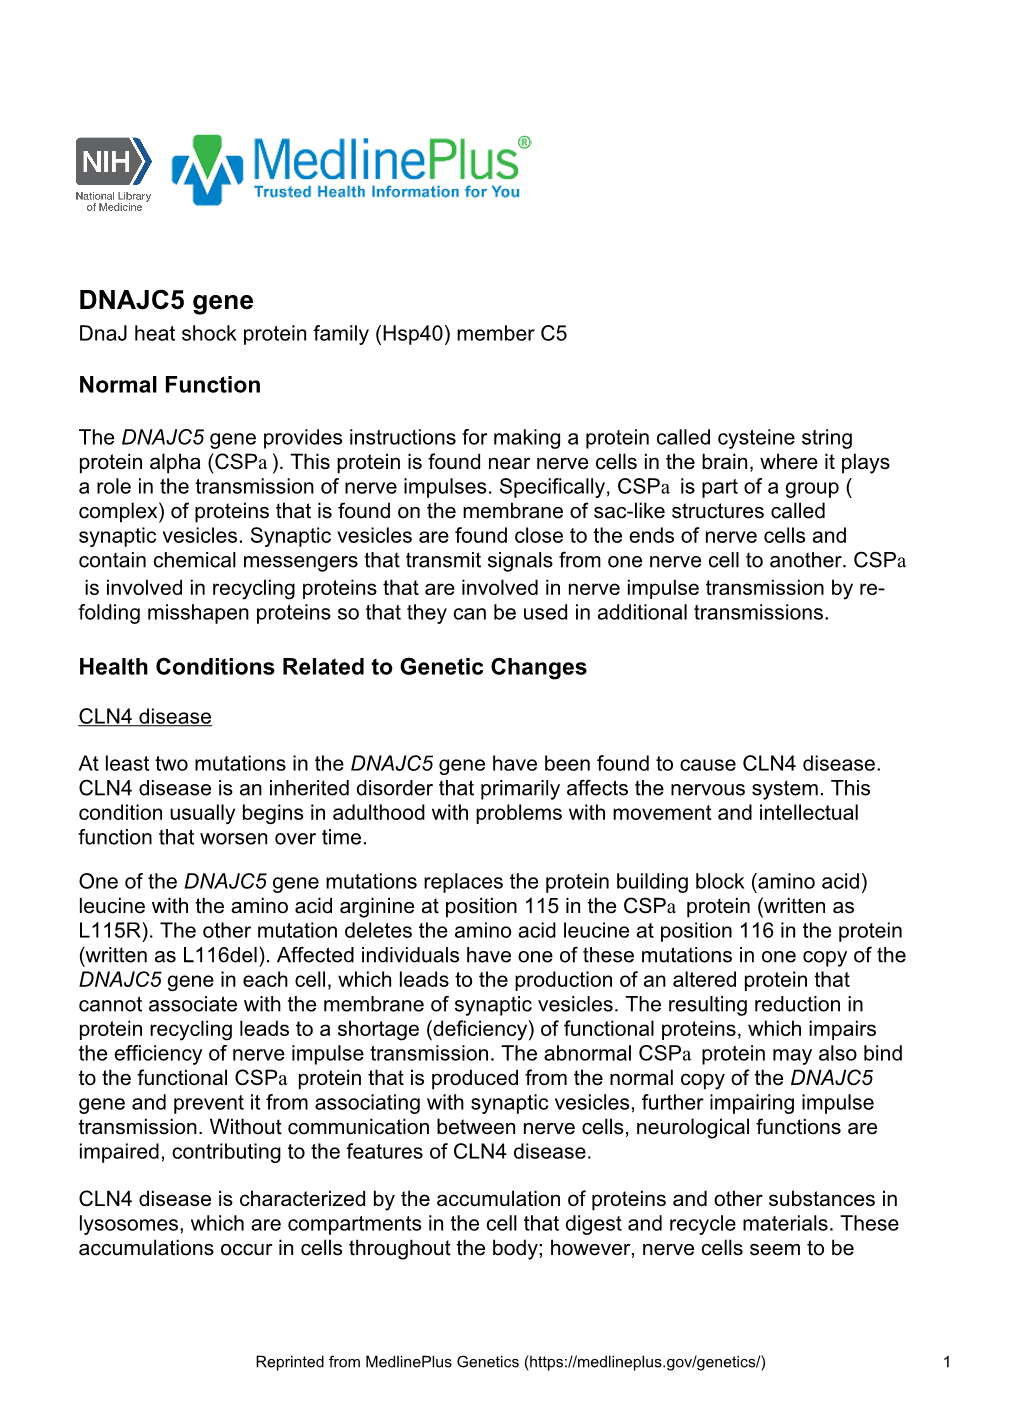 DNAJC5 Gene Dnaj Heat Shock Protein Family (Hsp40) Member C5